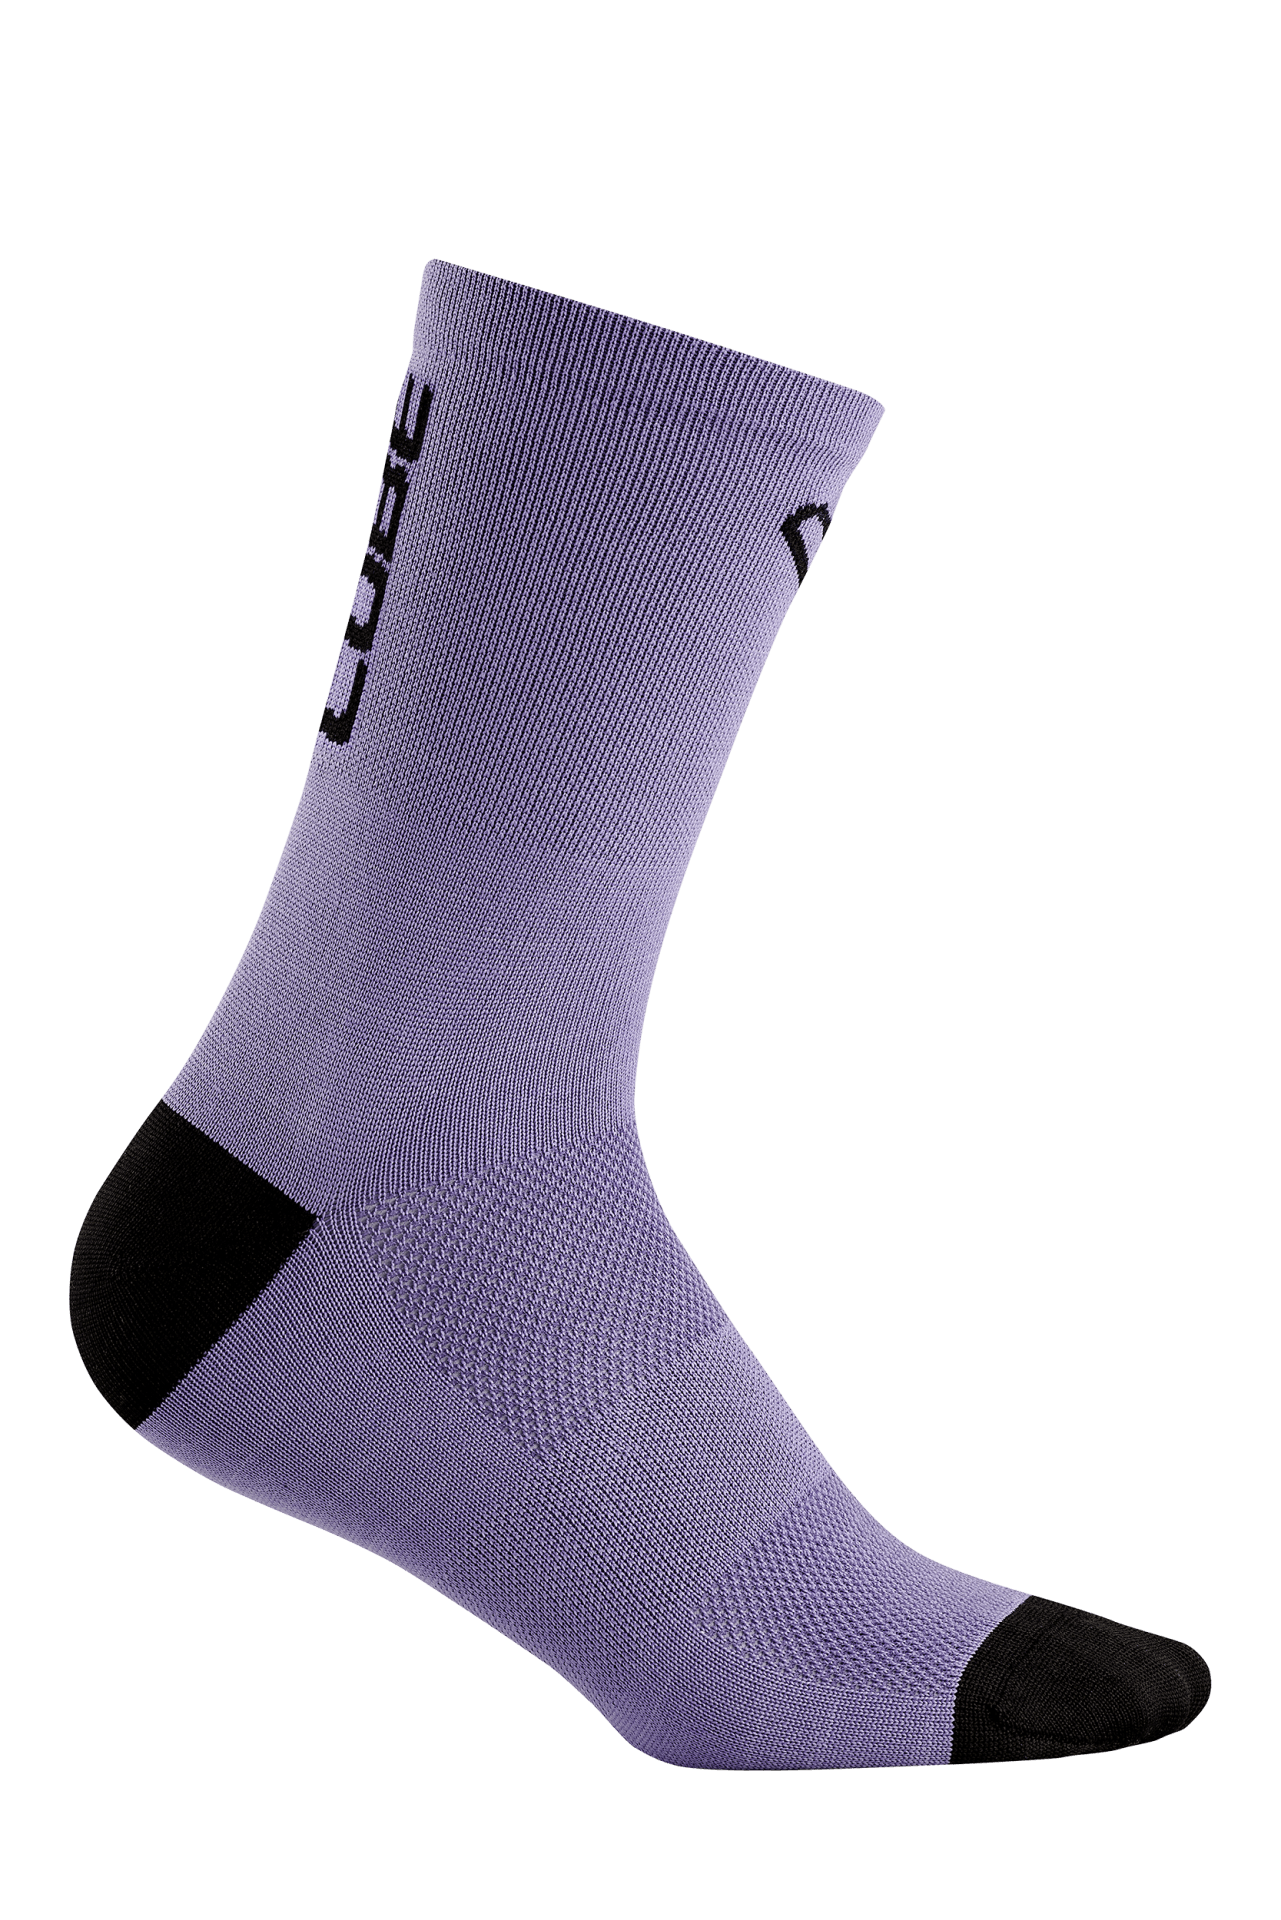 CUBE Socke High Cut ATX violet 36-39